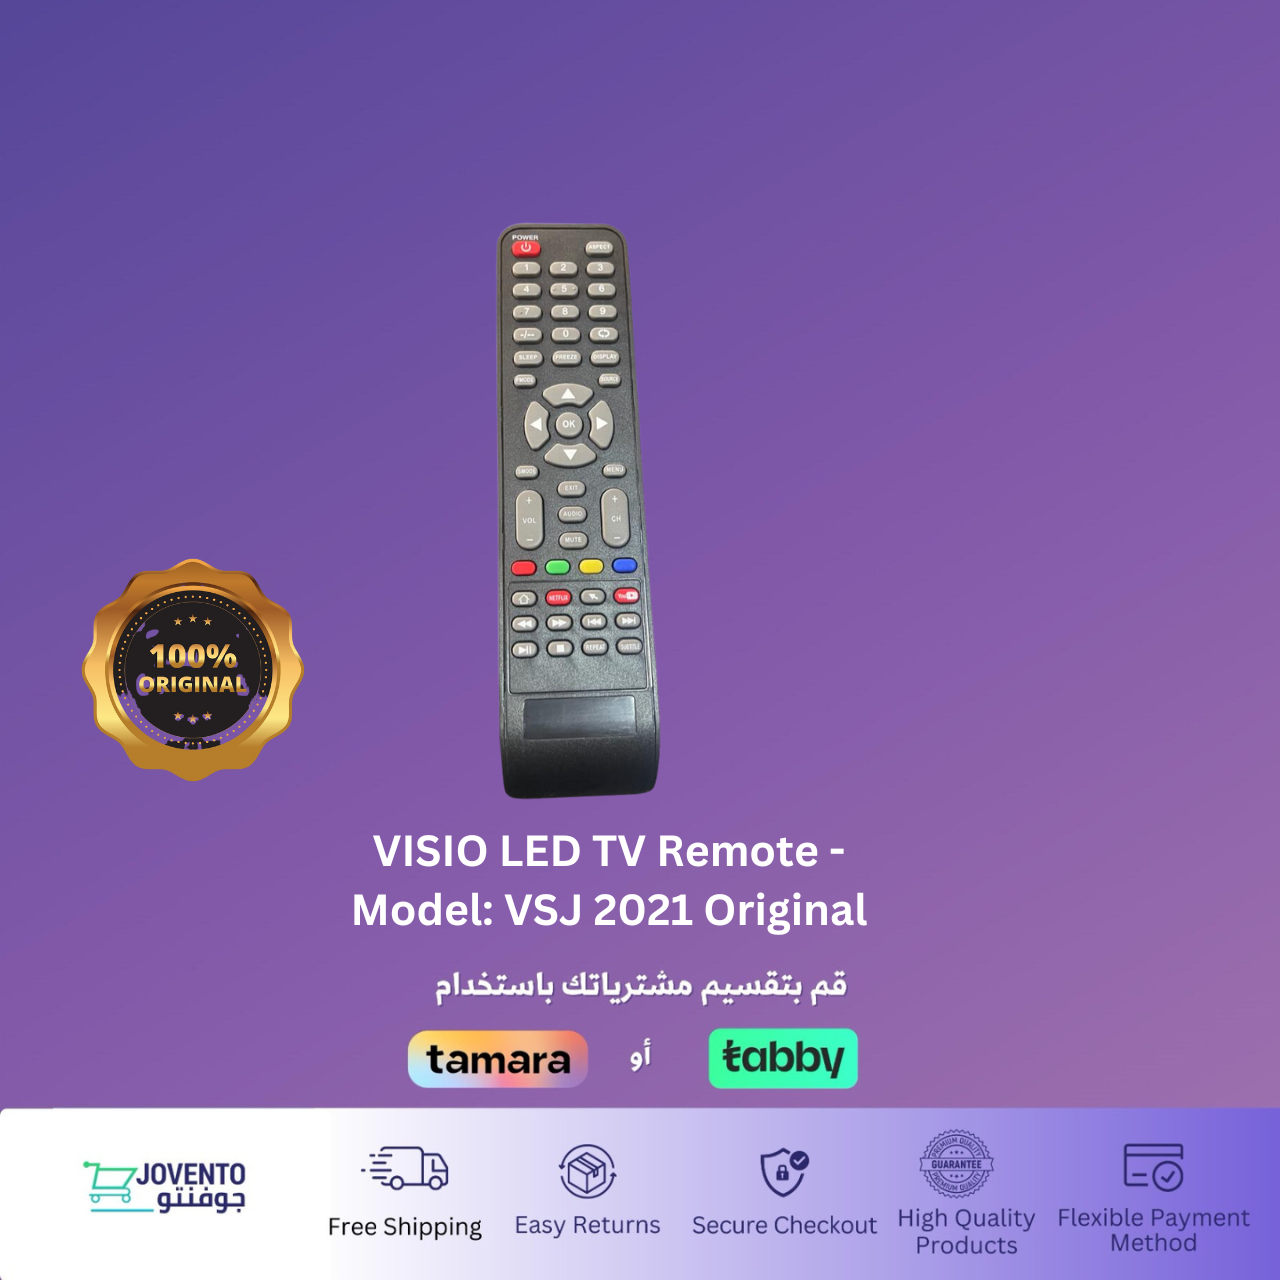 VISIO LED TV Remote - Model: VSJ 2021 Original